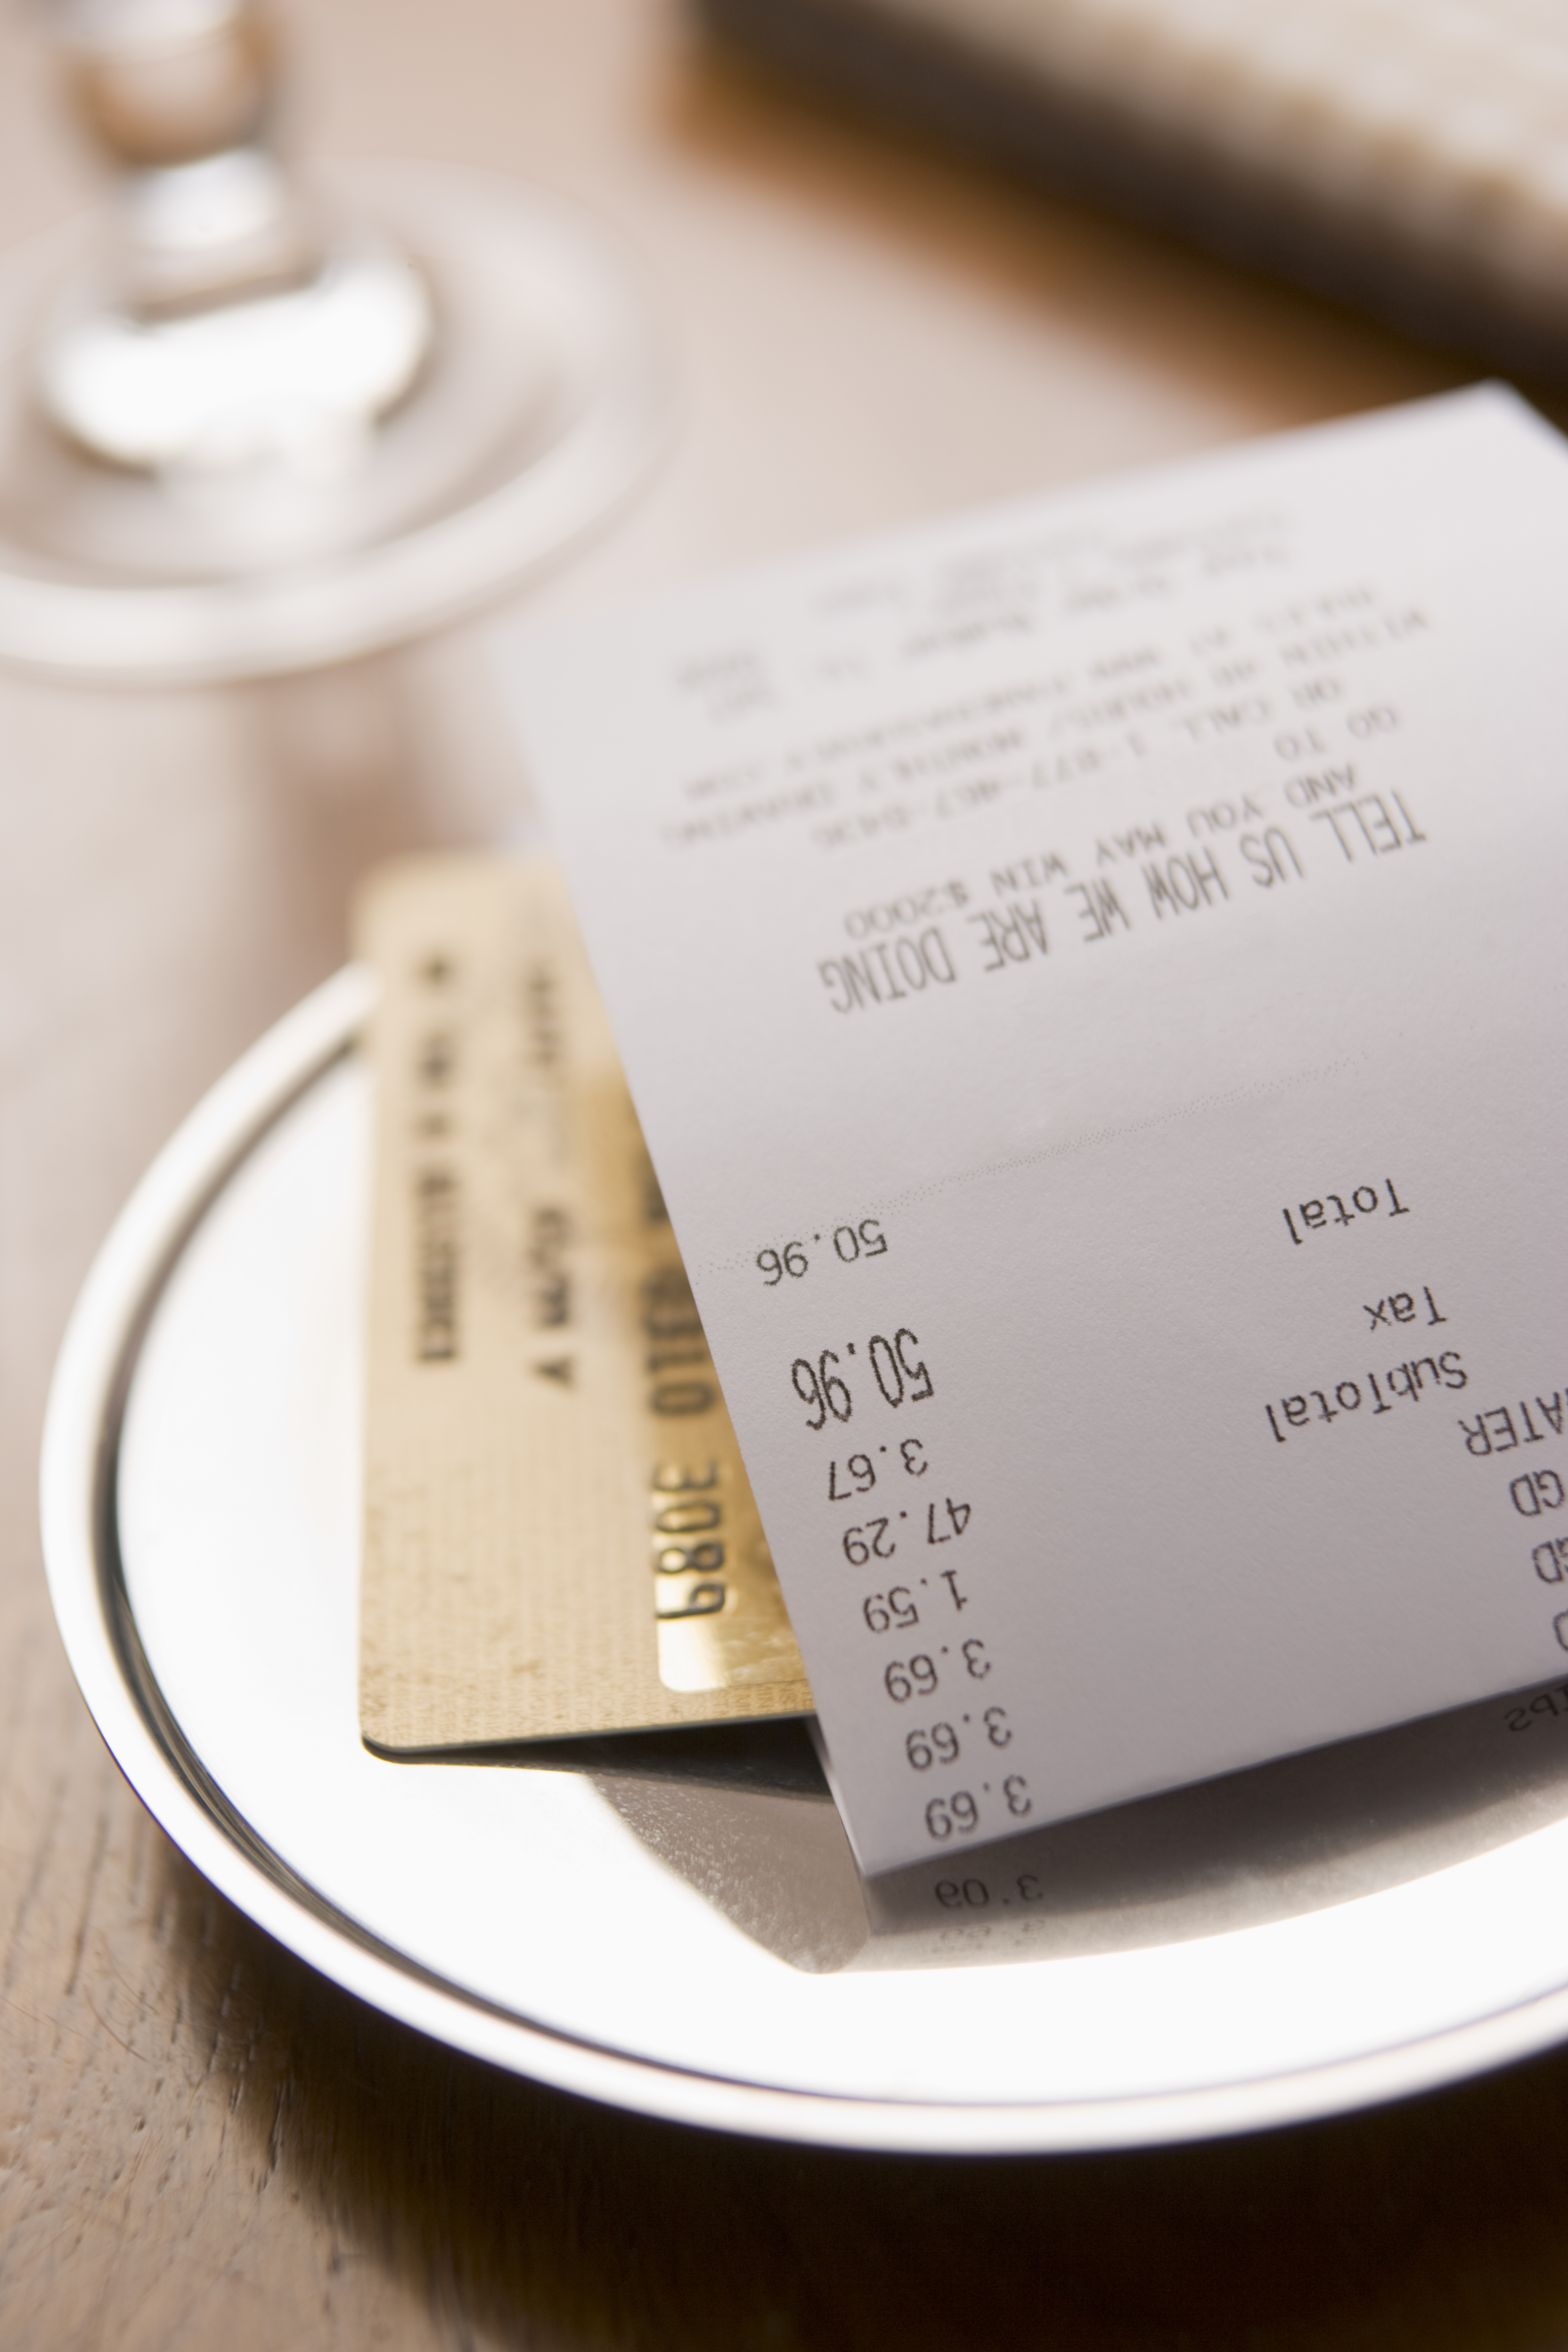 A restaurant bill and a credit card | Source: Shutterstock